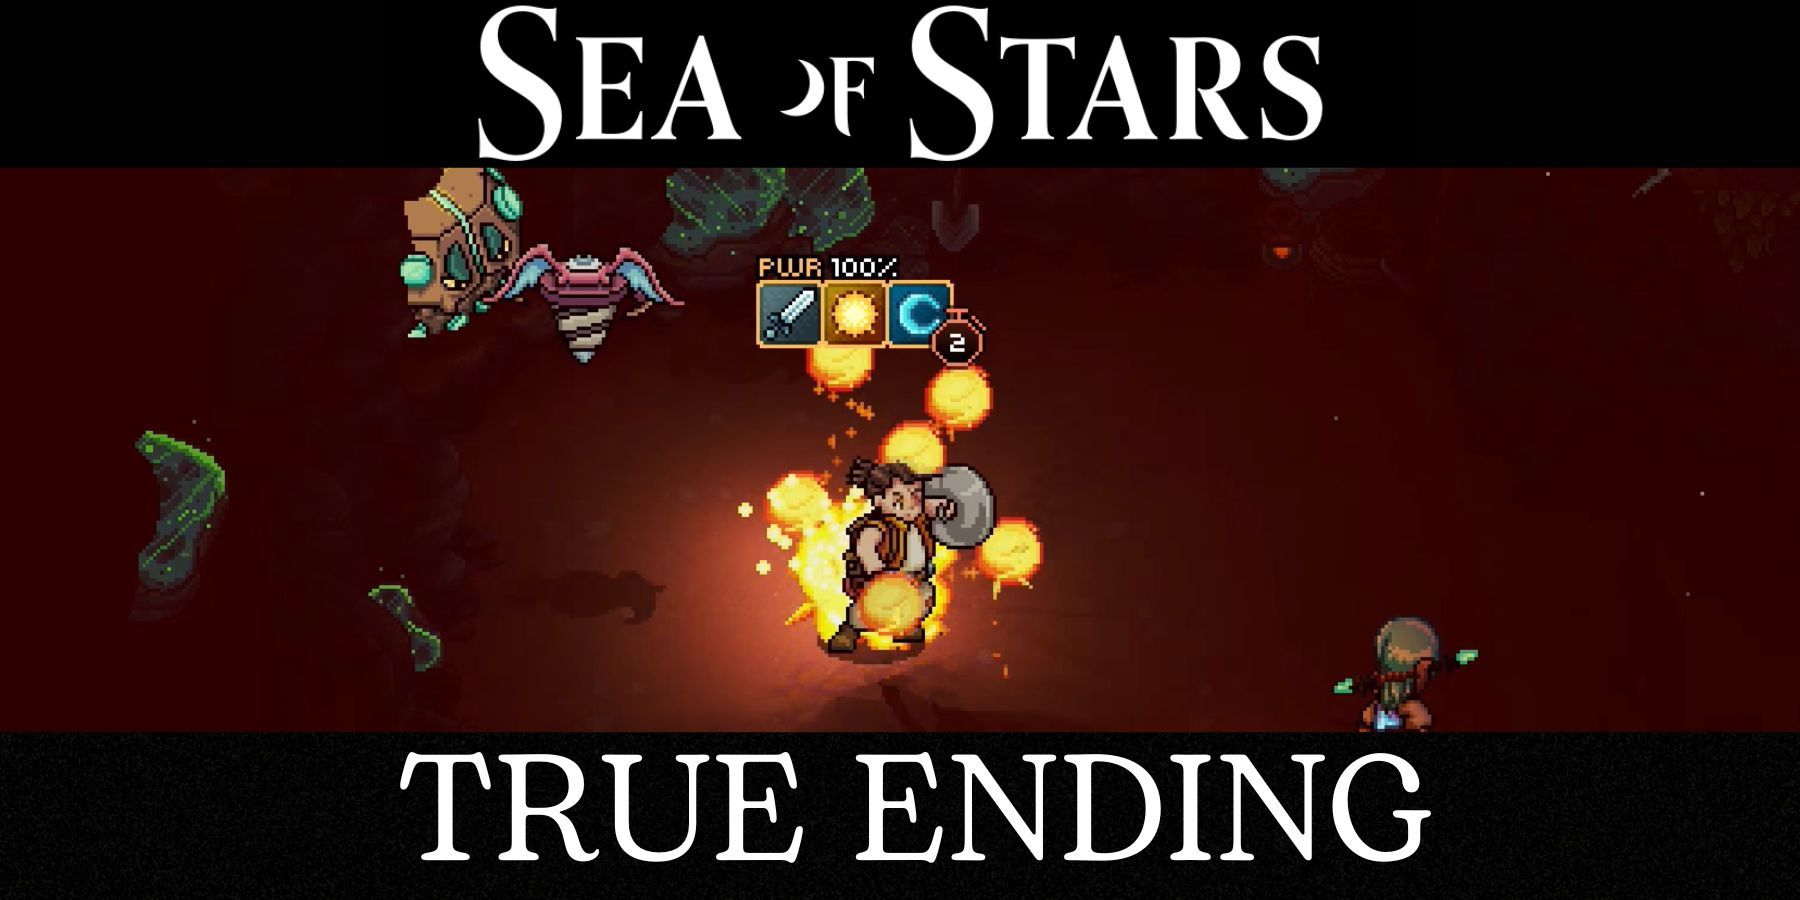 Theory true ending/ Théorie vrai fin : r/seaofstars